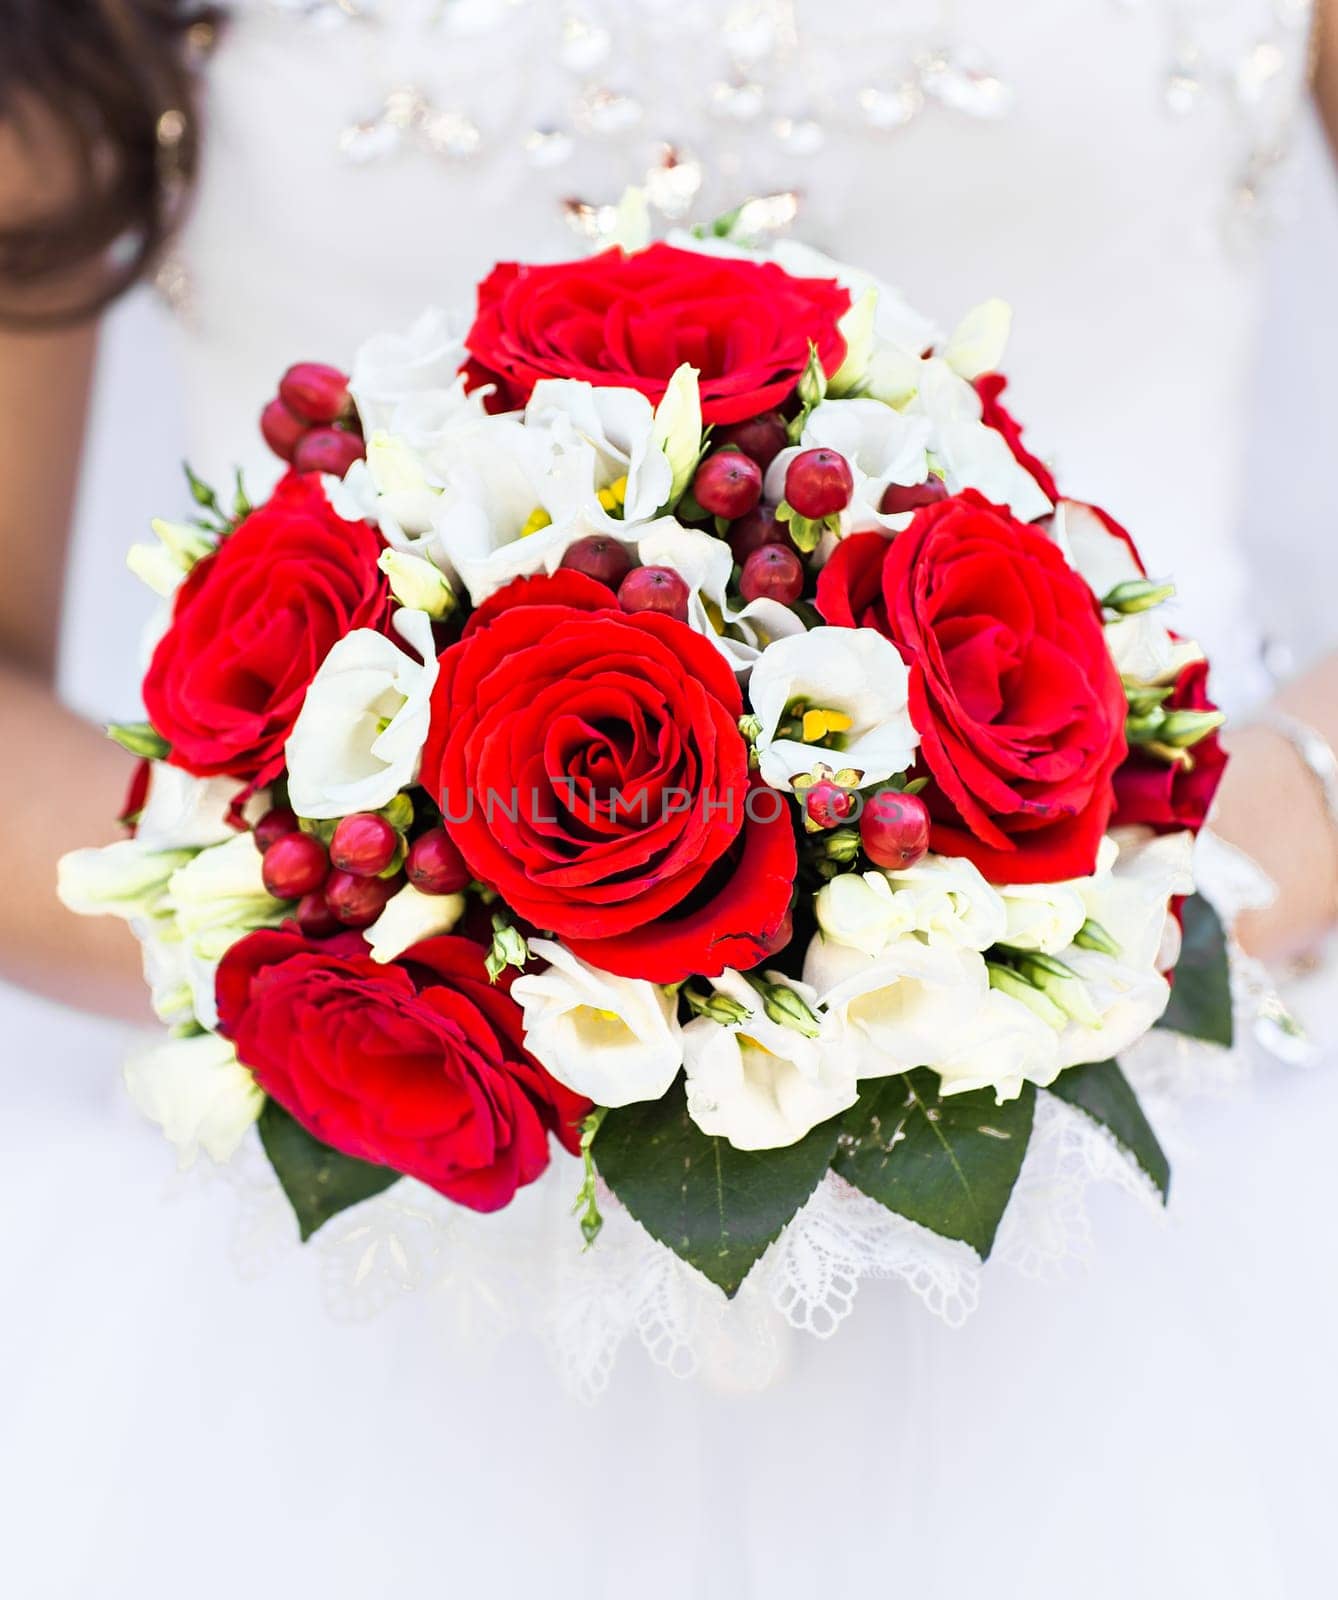 Colorful bridal bouquet. Wedding bouquet of a bride by Satura86